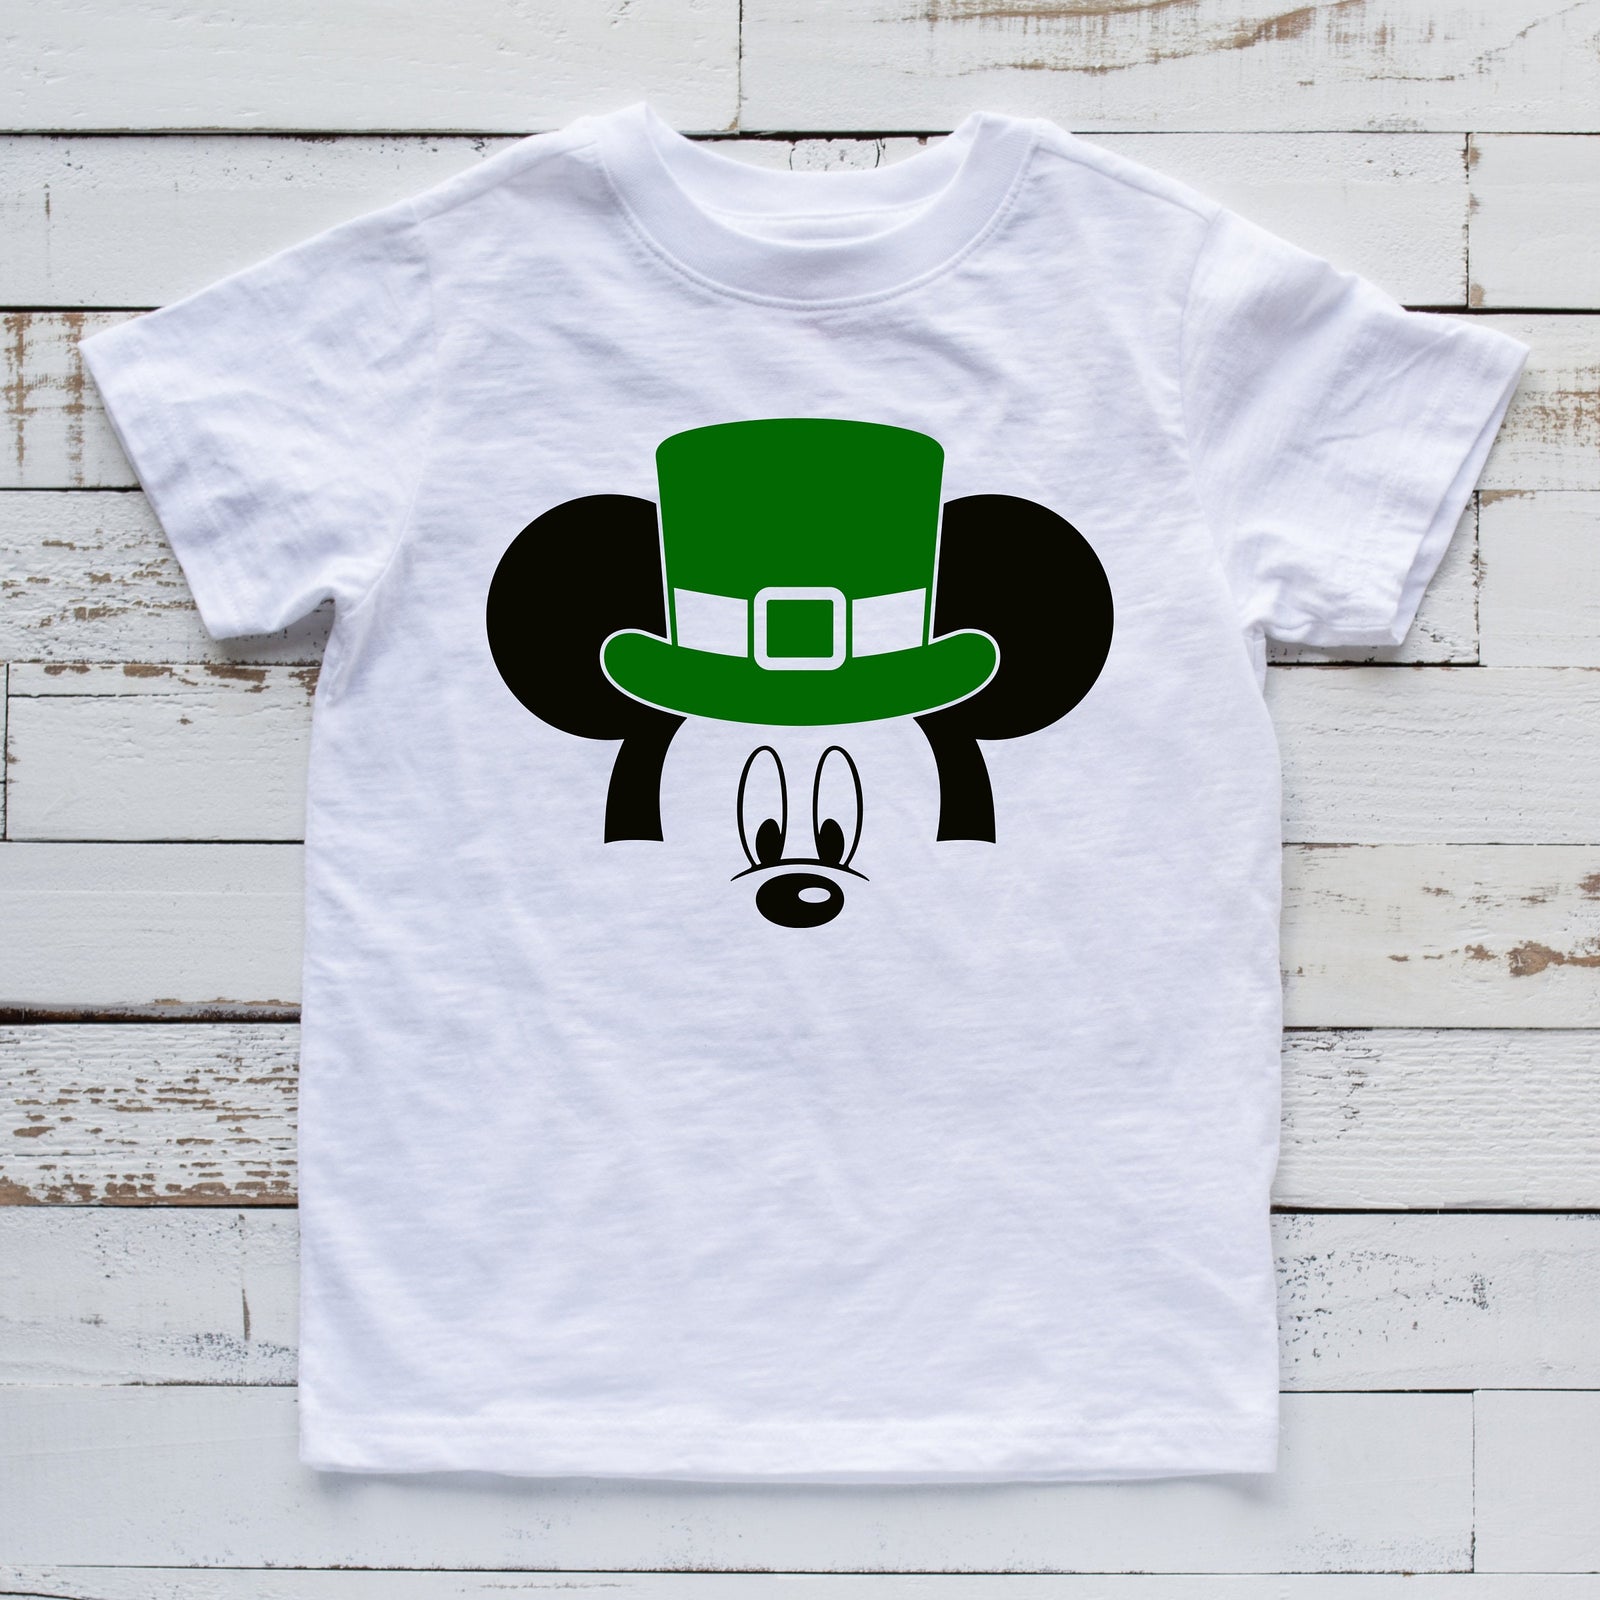 St. Patrick's Day Mickey Mouse T Shirt for Kids - clover glasses - Shamrocks - Lucky Disney Shirt